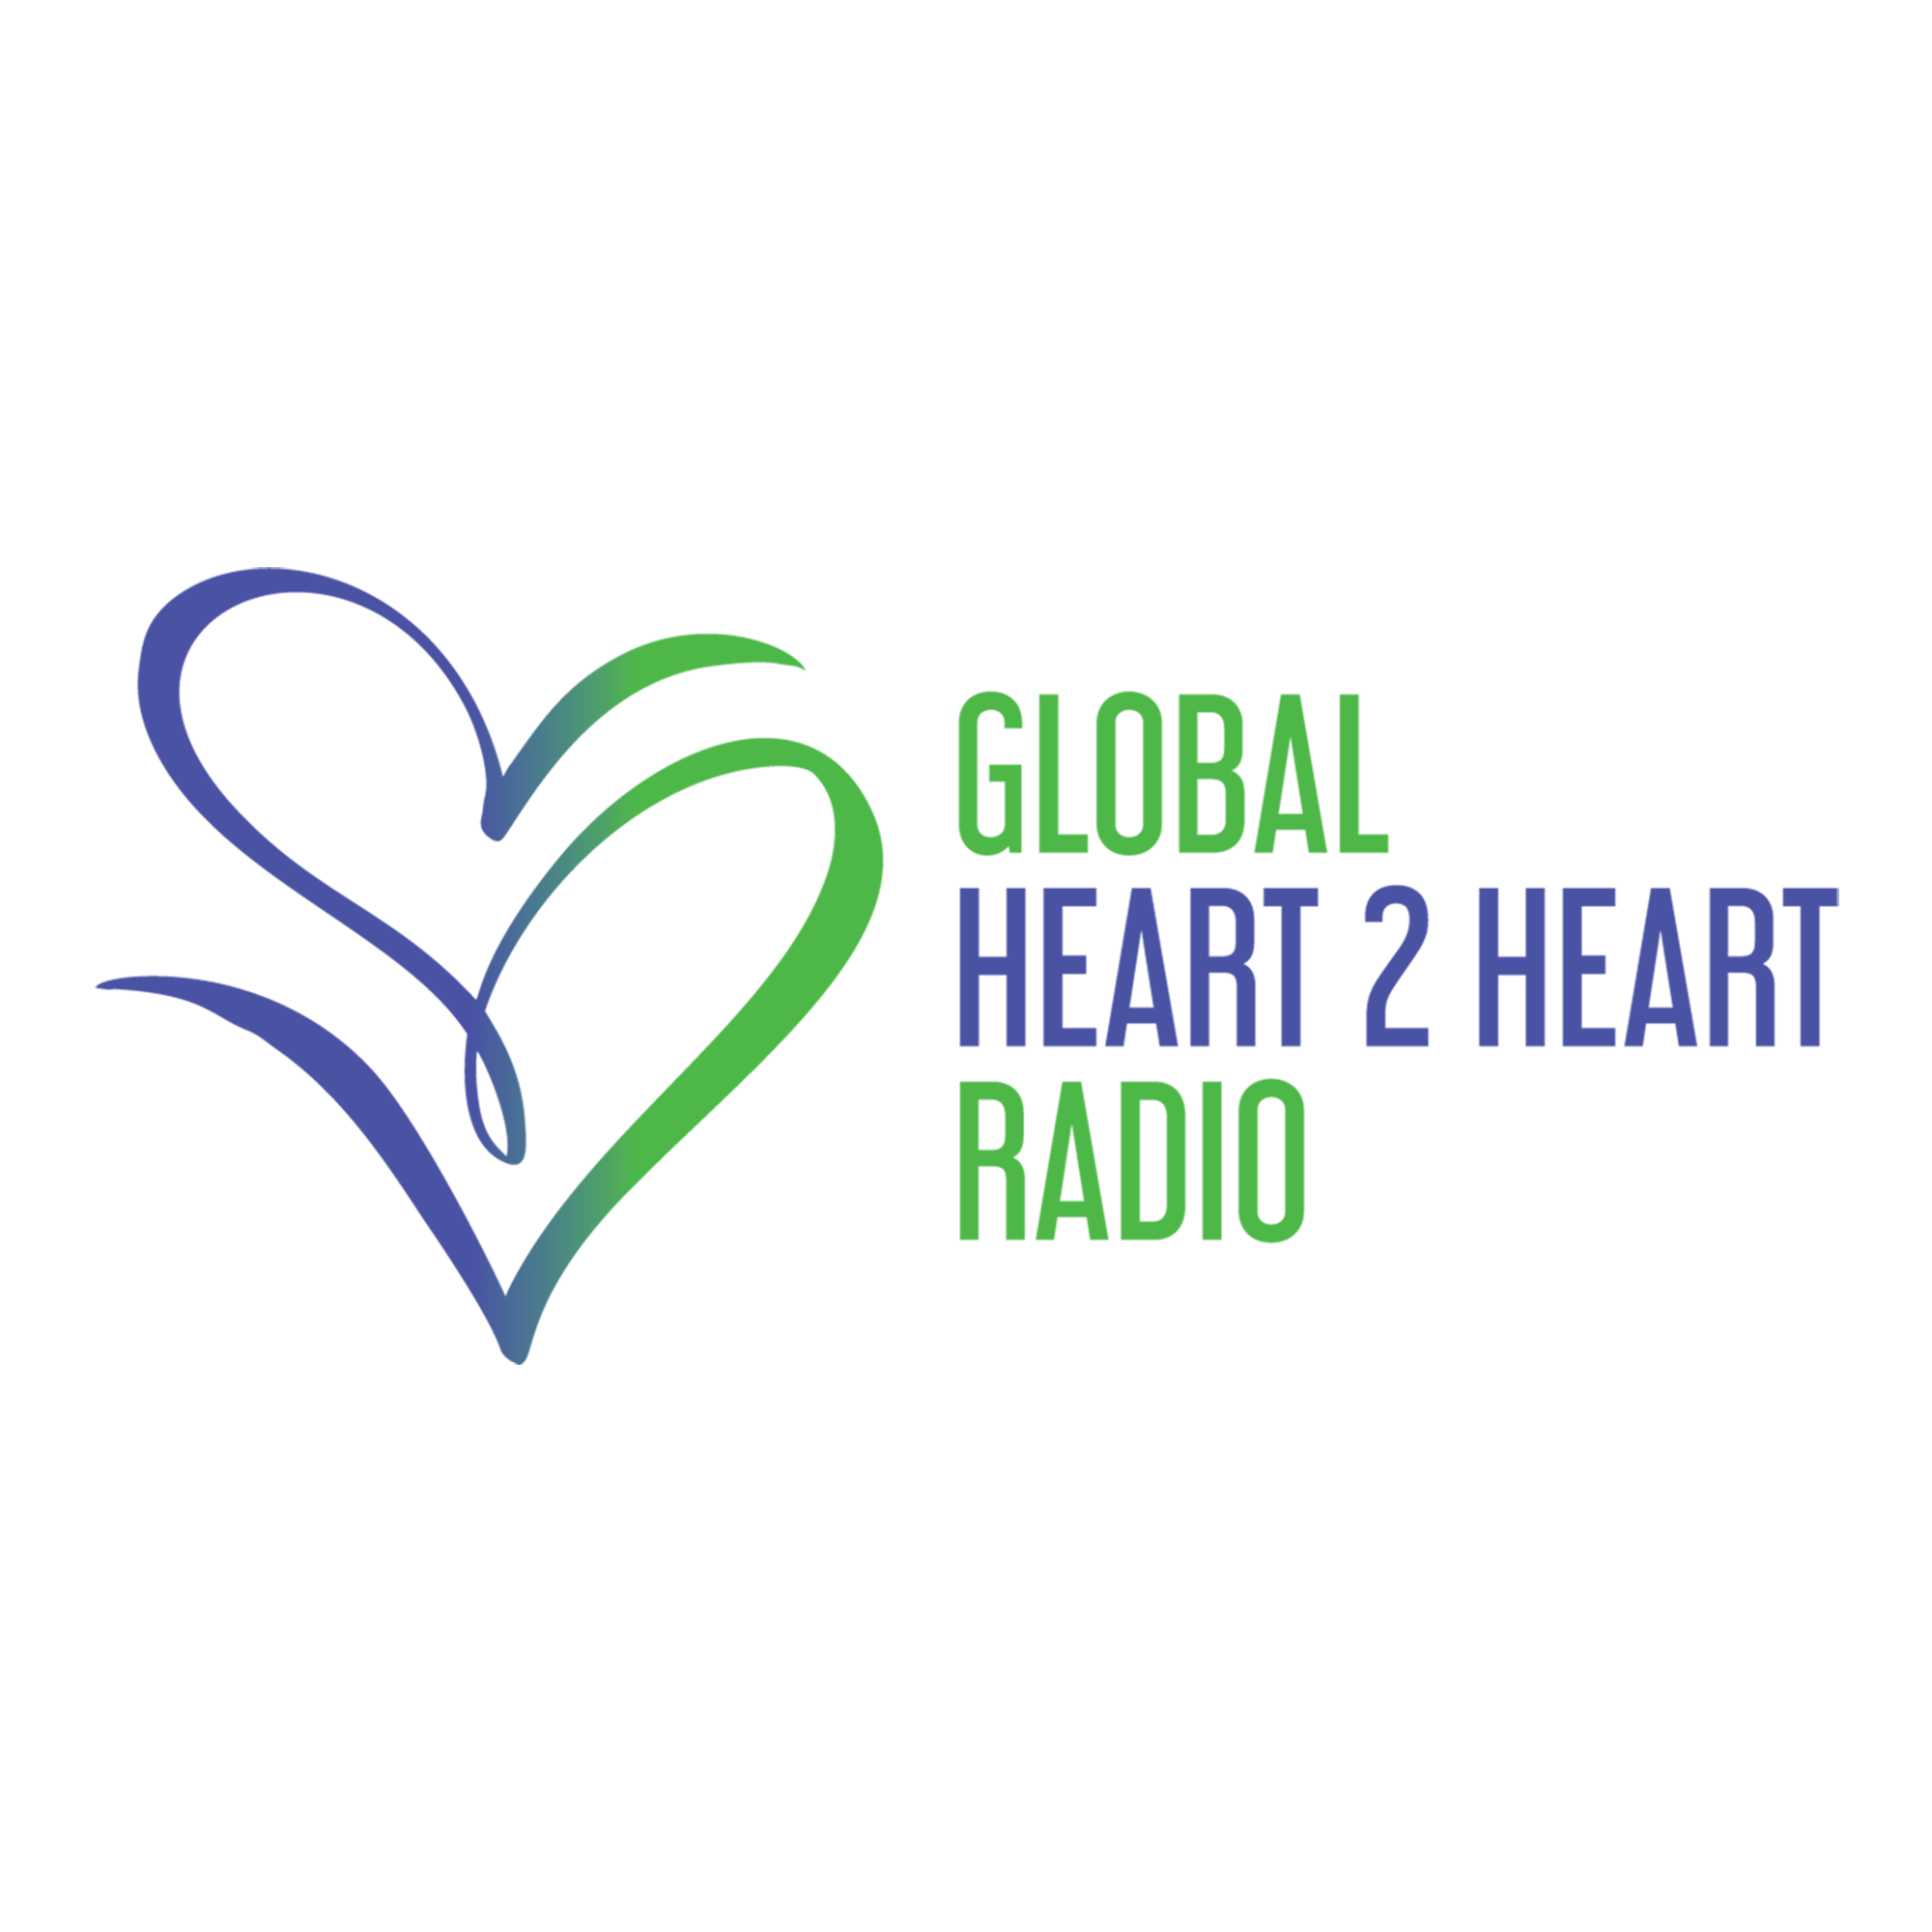 Global Heart2Heart